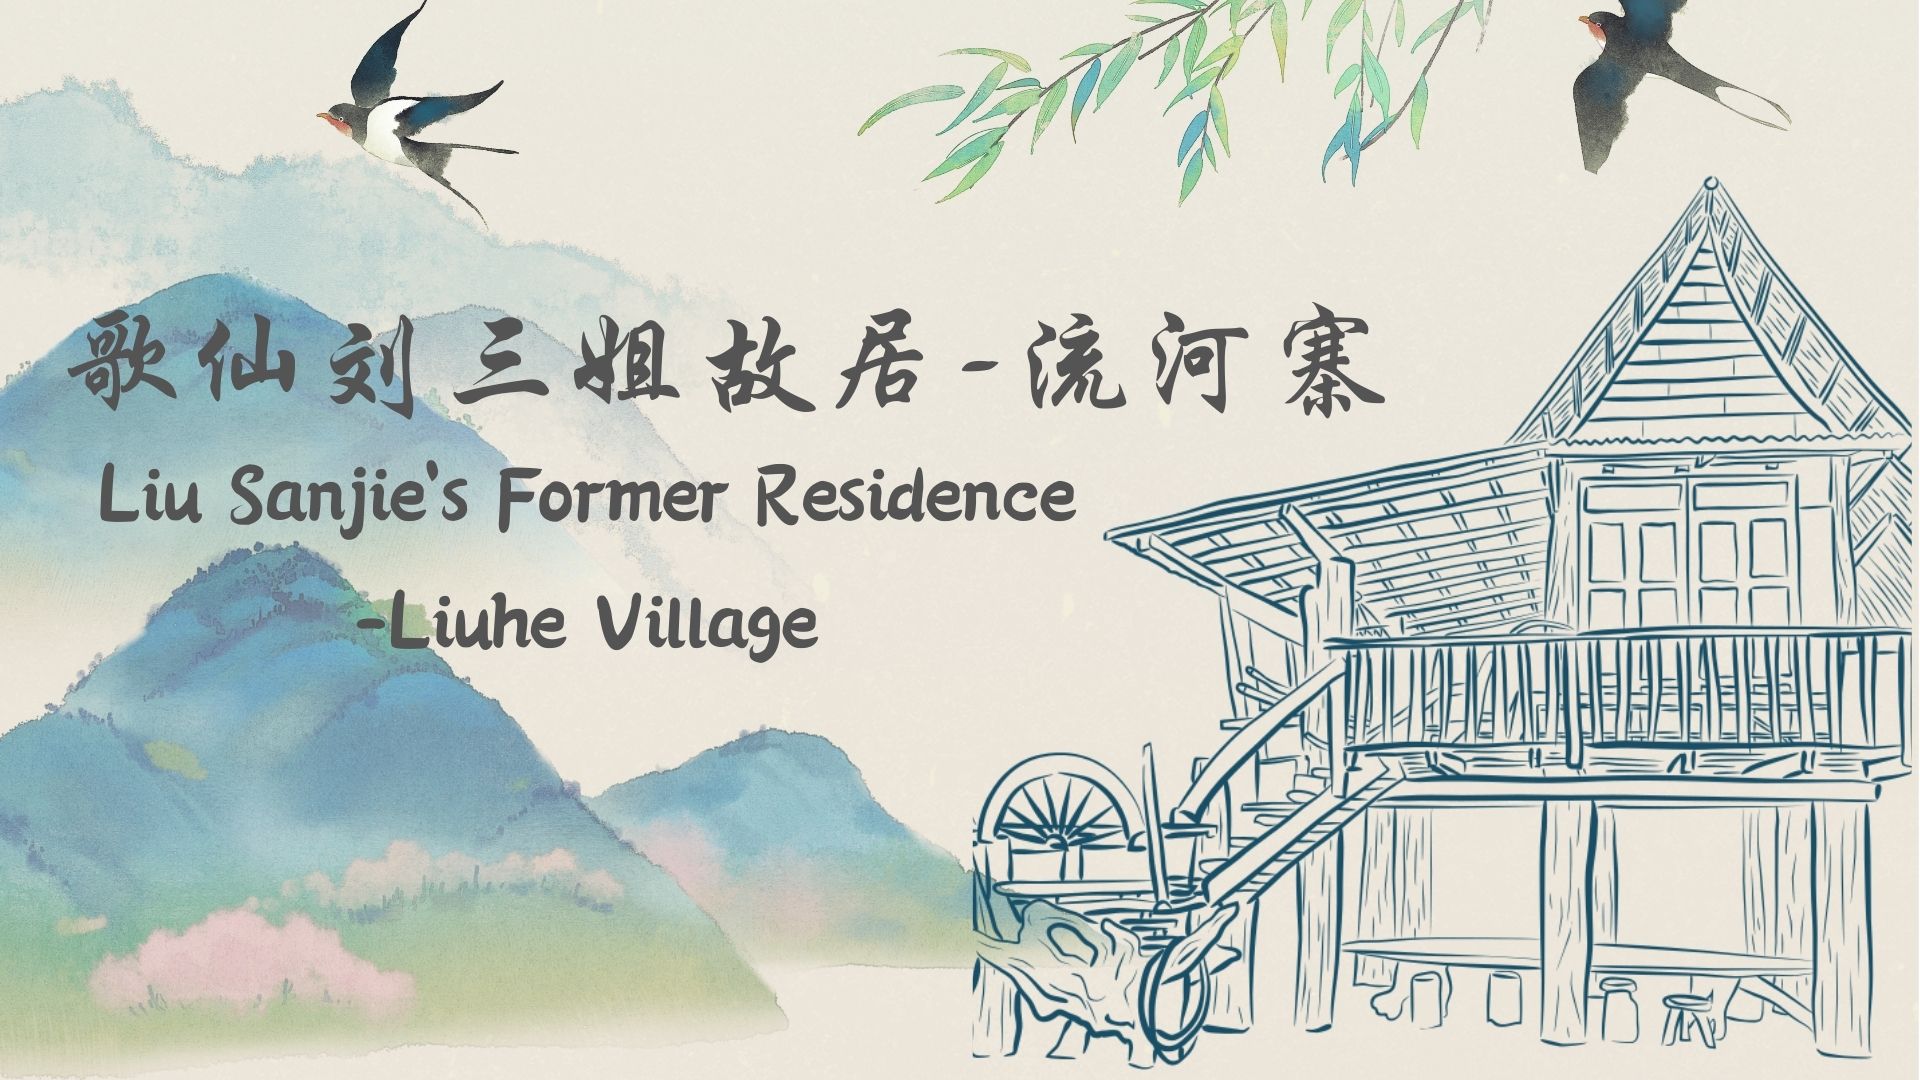 Liu Sanjie’s Former Residence- Liuhe Village